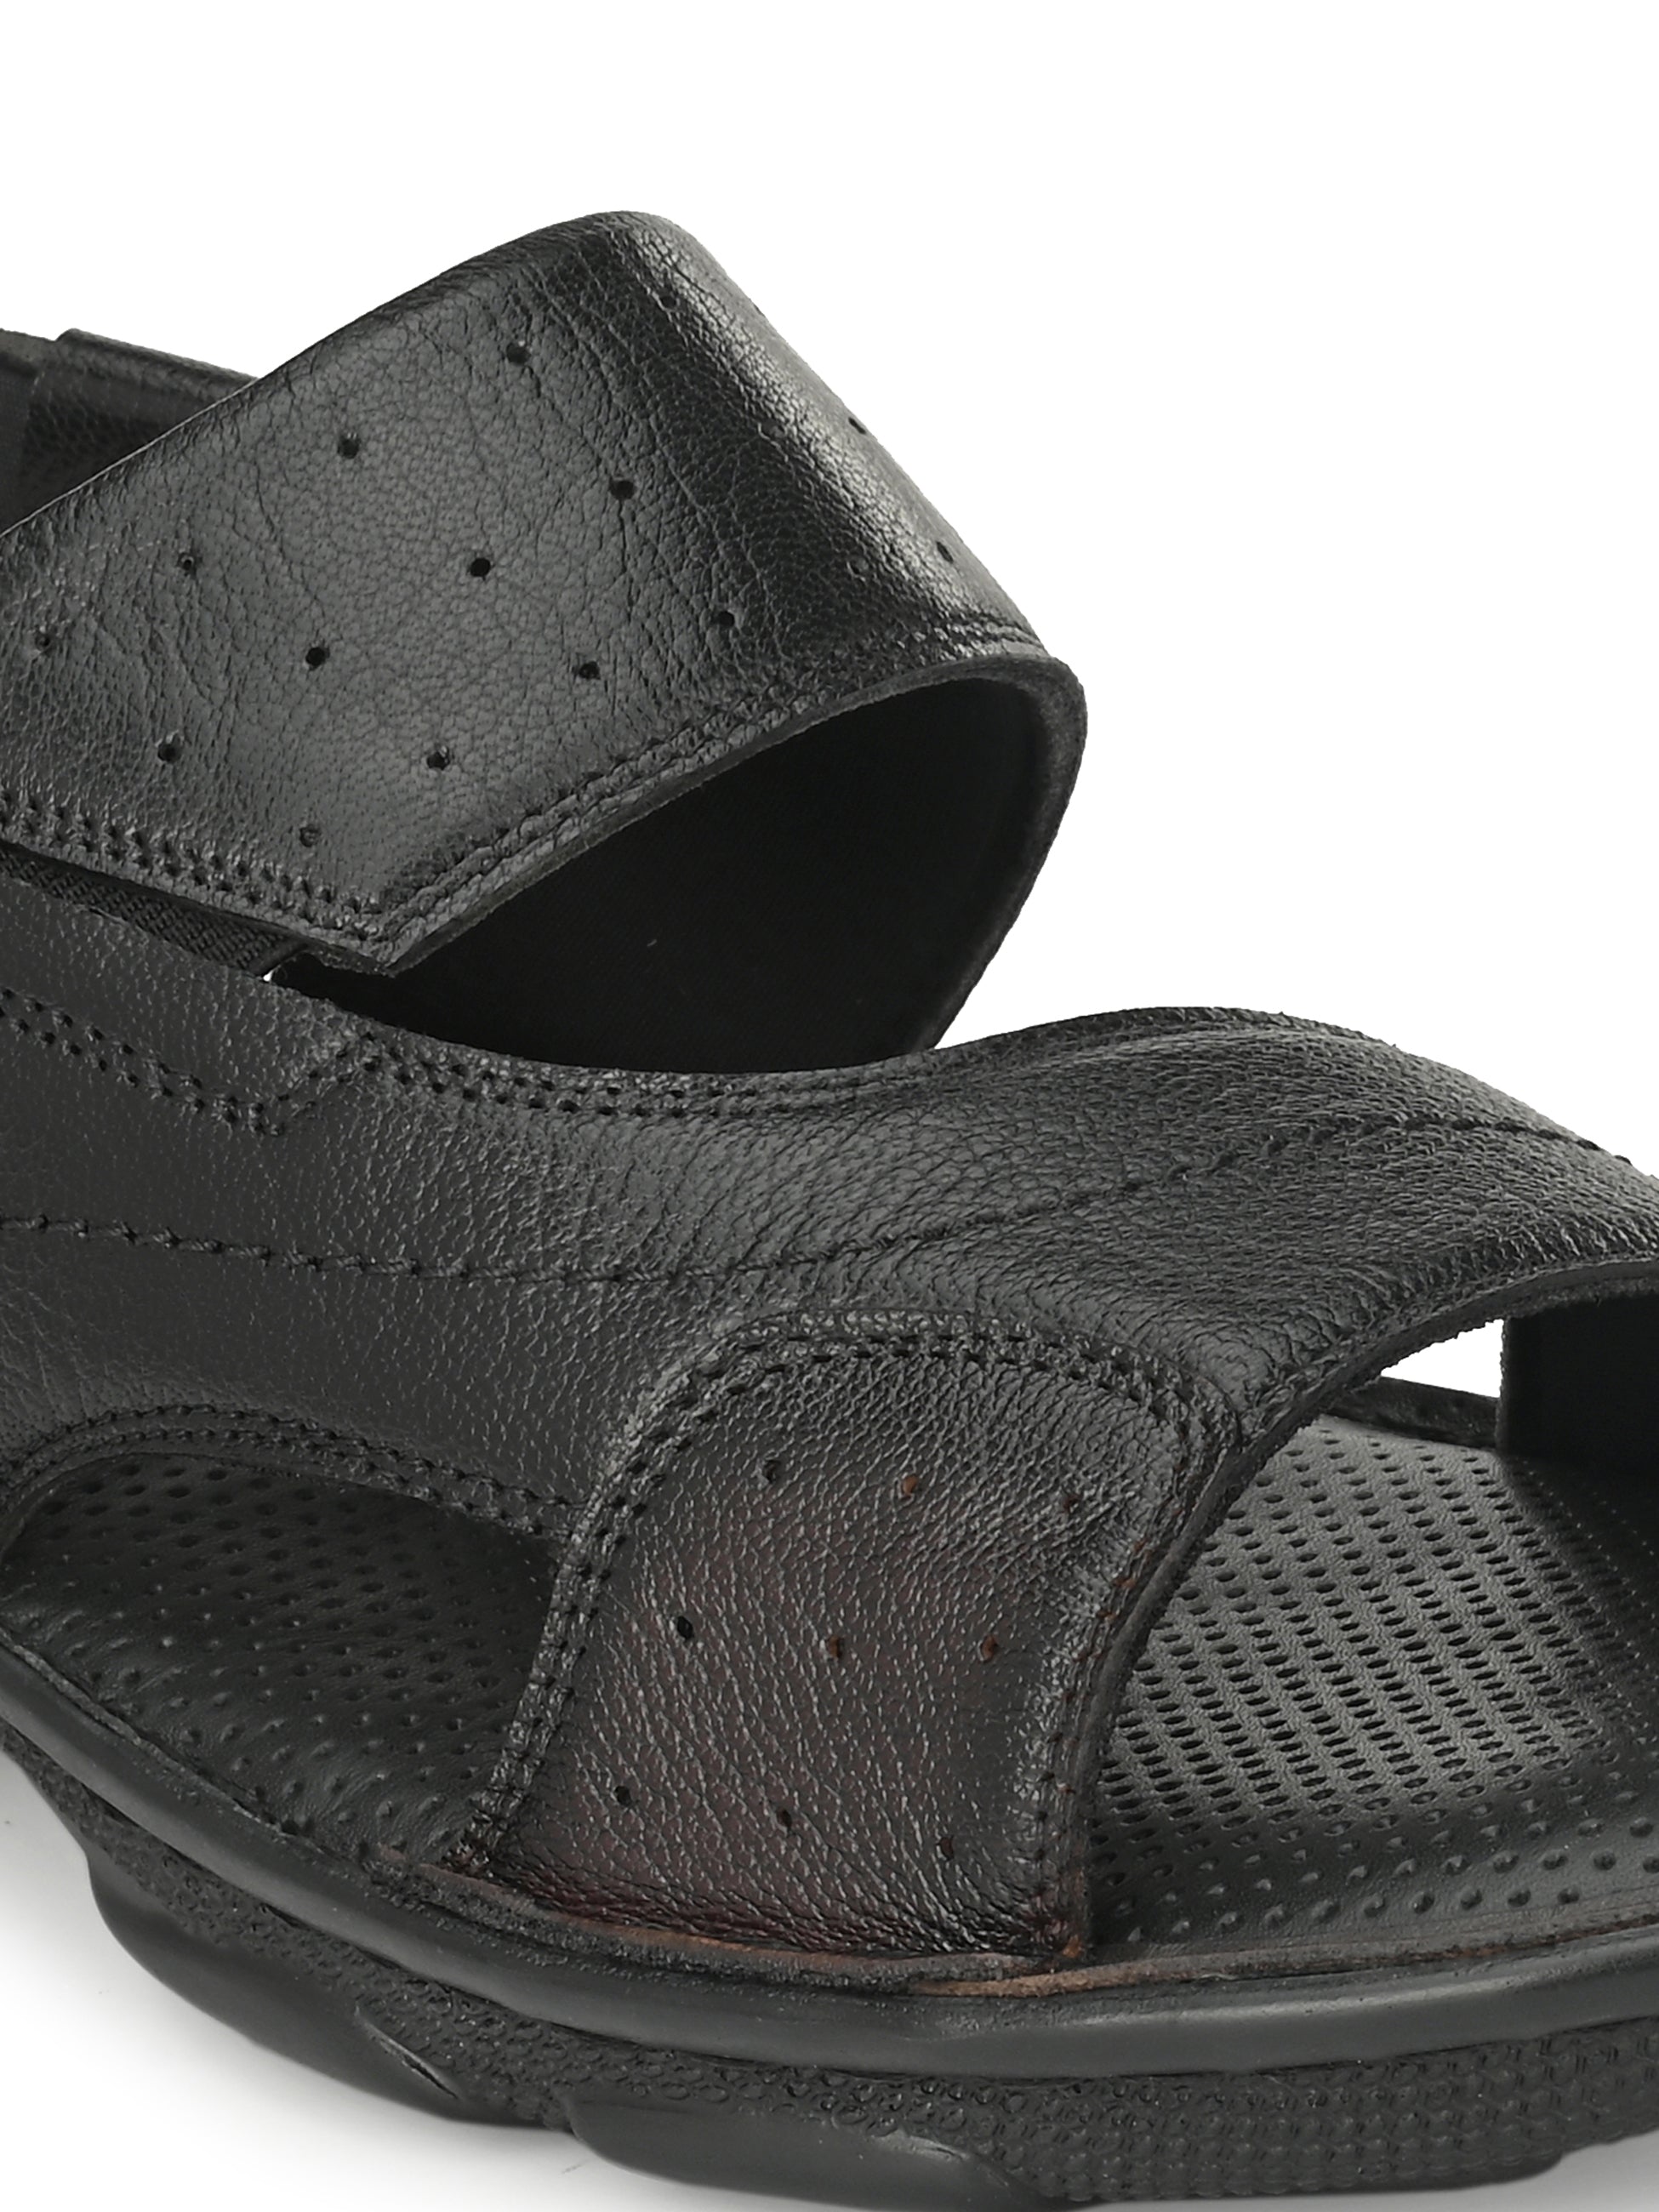 HITZ PYOTR BLACK SANDALS FOR MEN – Hitz Shoes Online